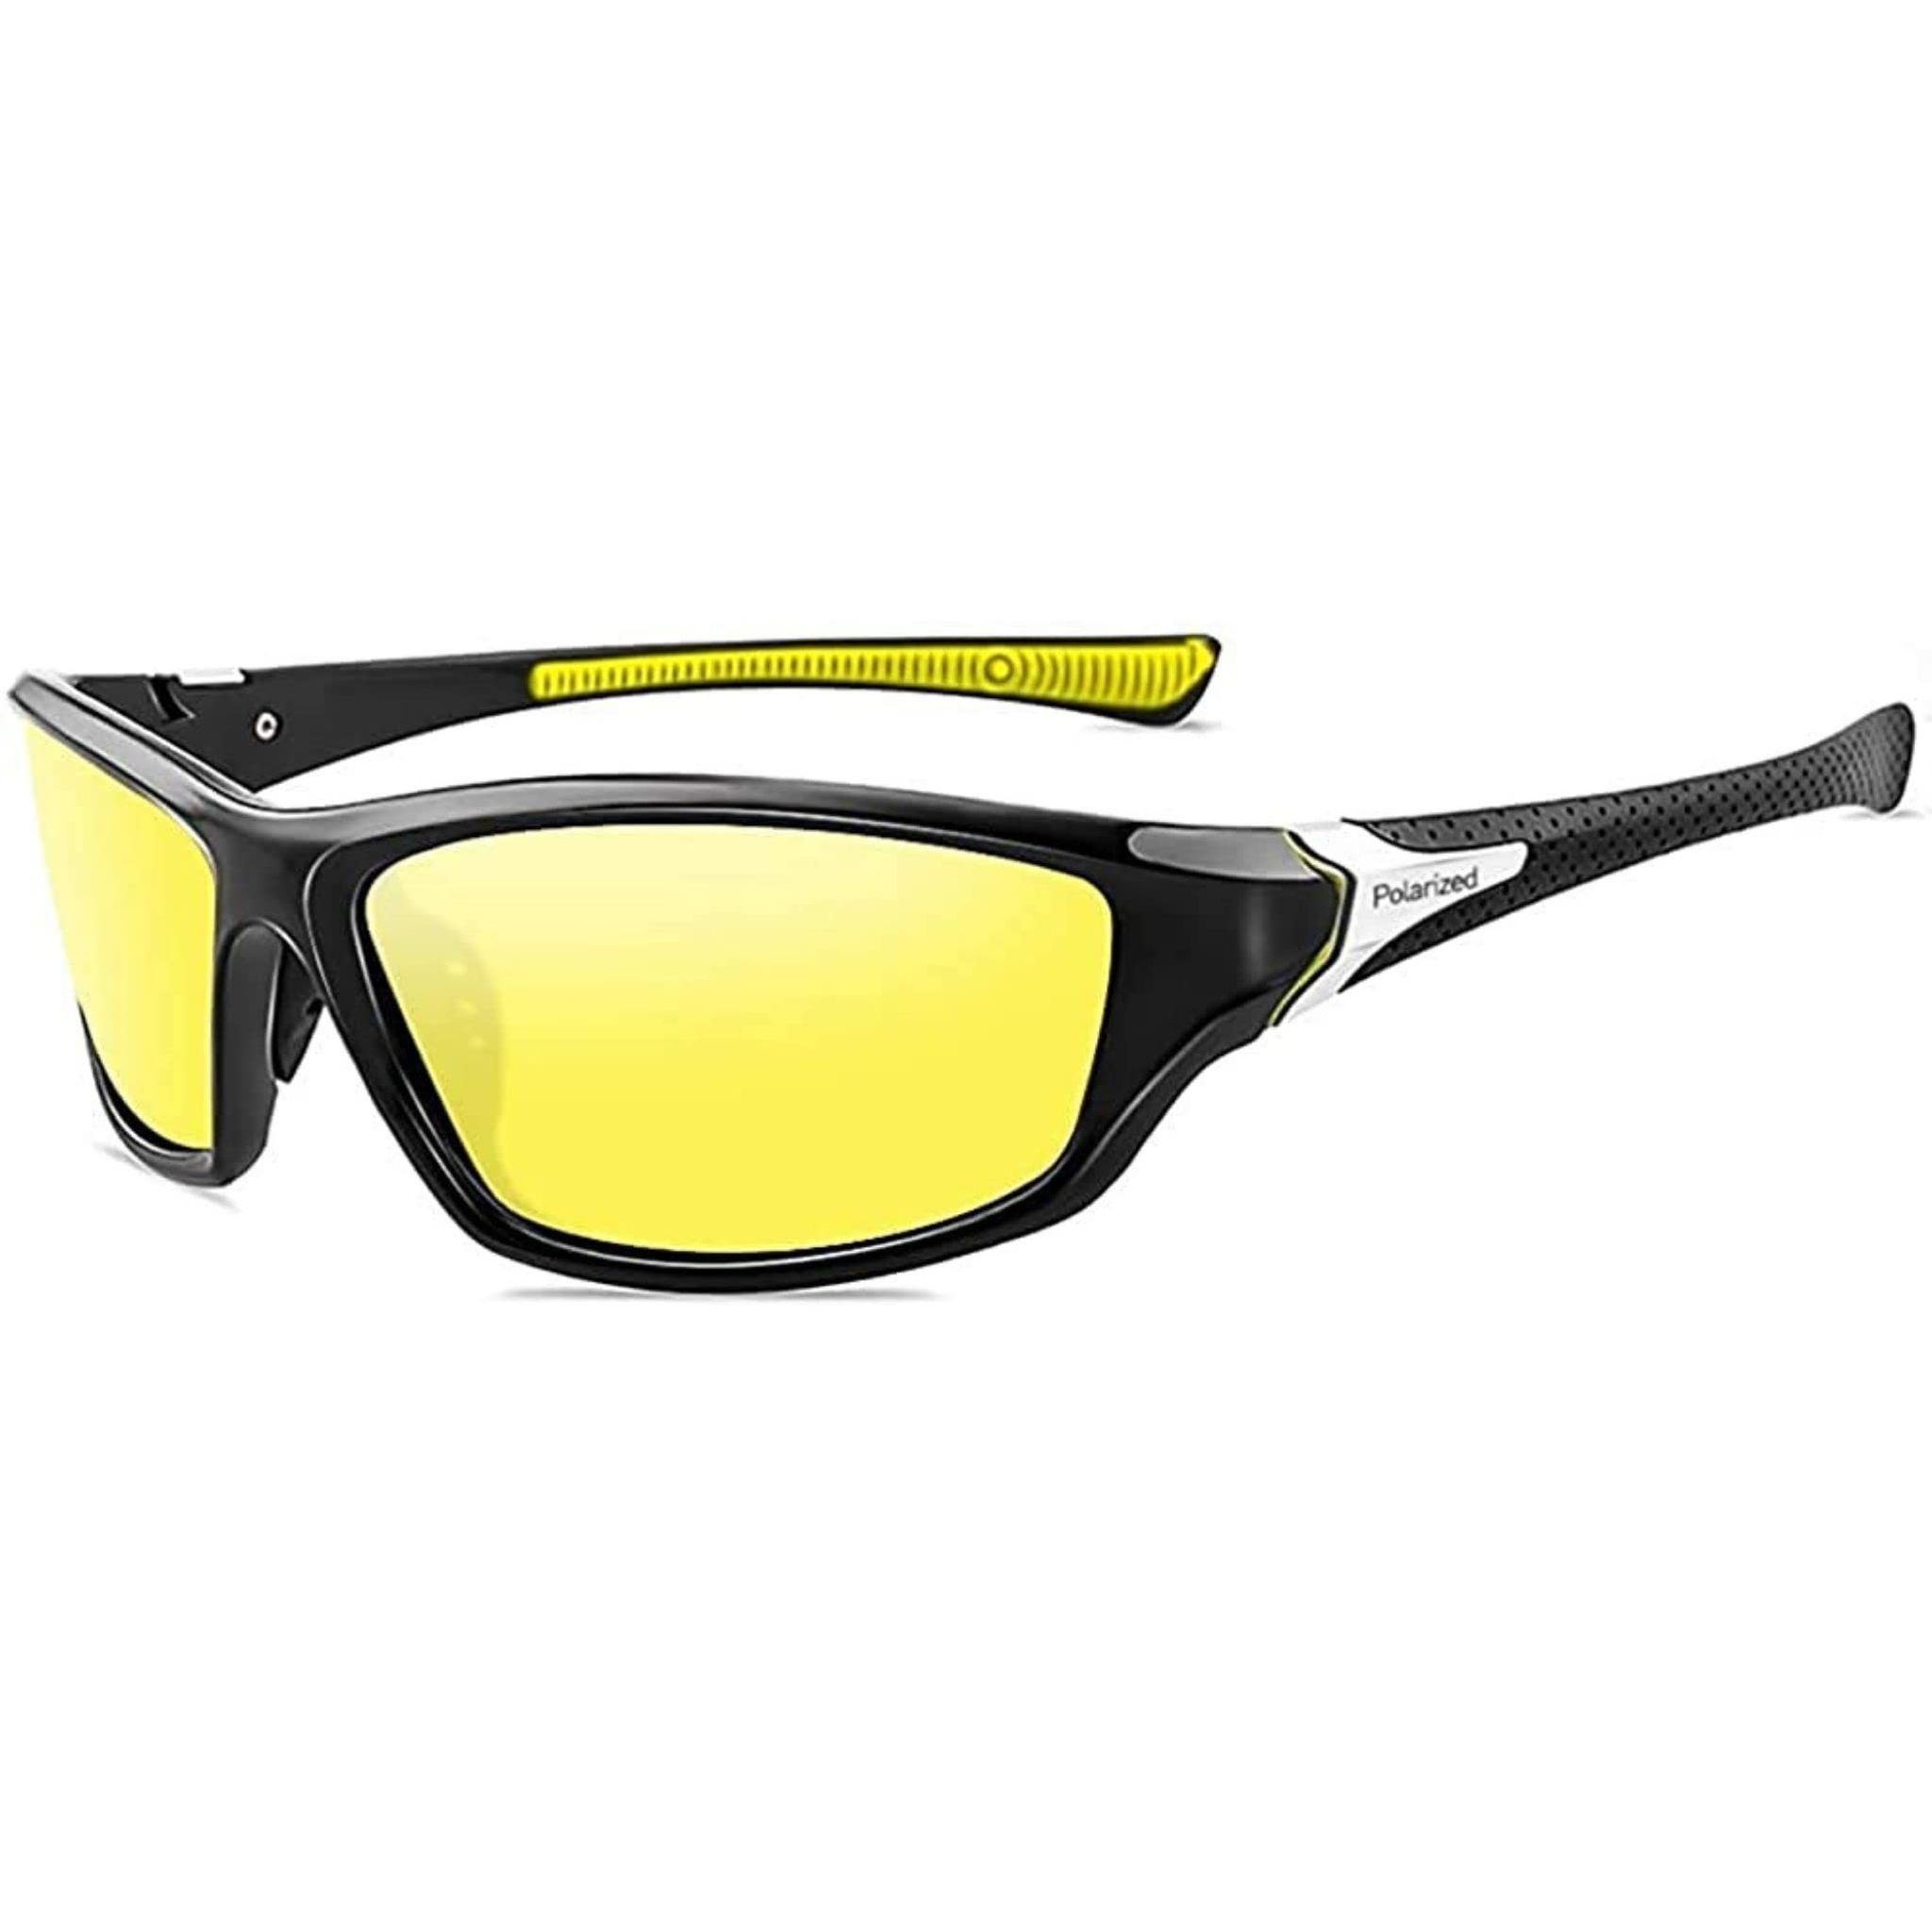 Polarized Wholesale Sunglasses - POL3219 ⋆ West Coast Sunglasses Inc.